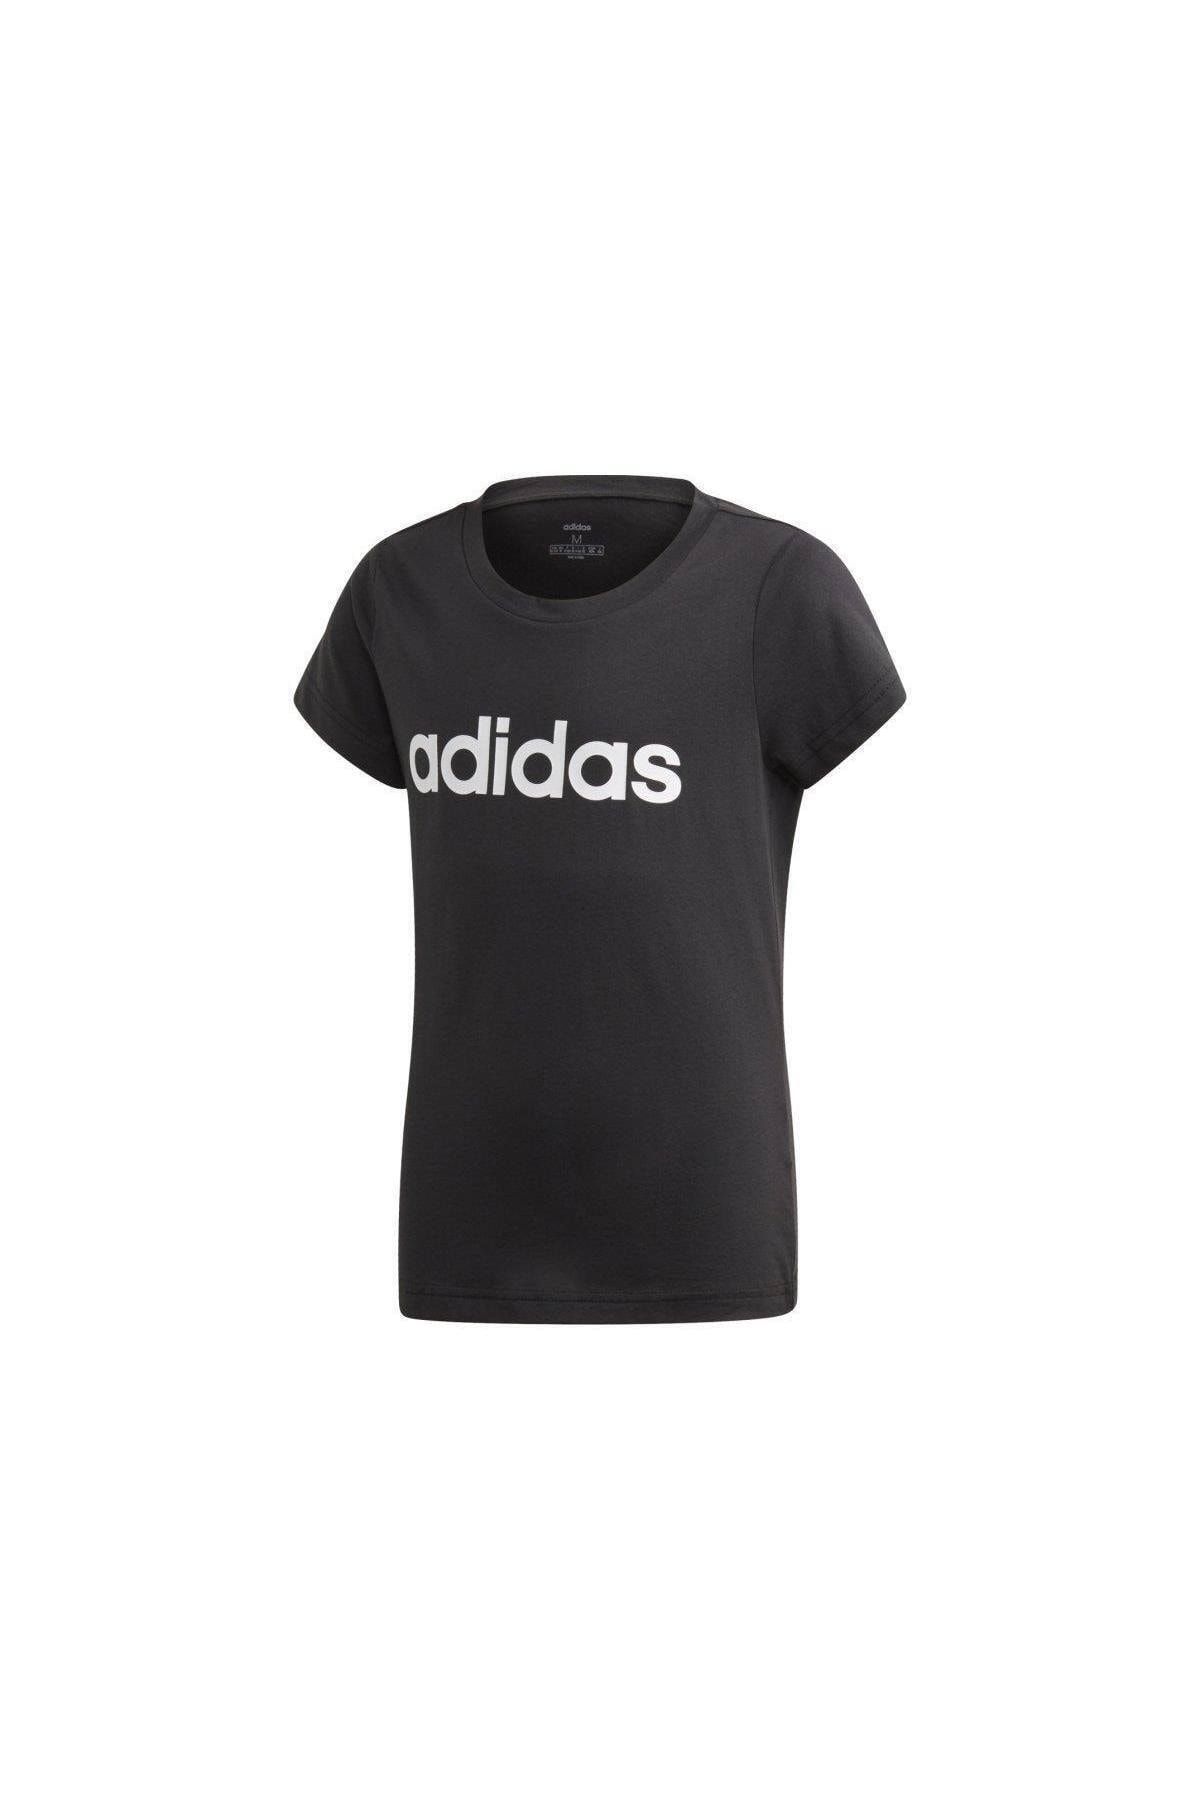 adidas YG E LIN TEE Siyah Kız Çocuk T-Shirt 101069208